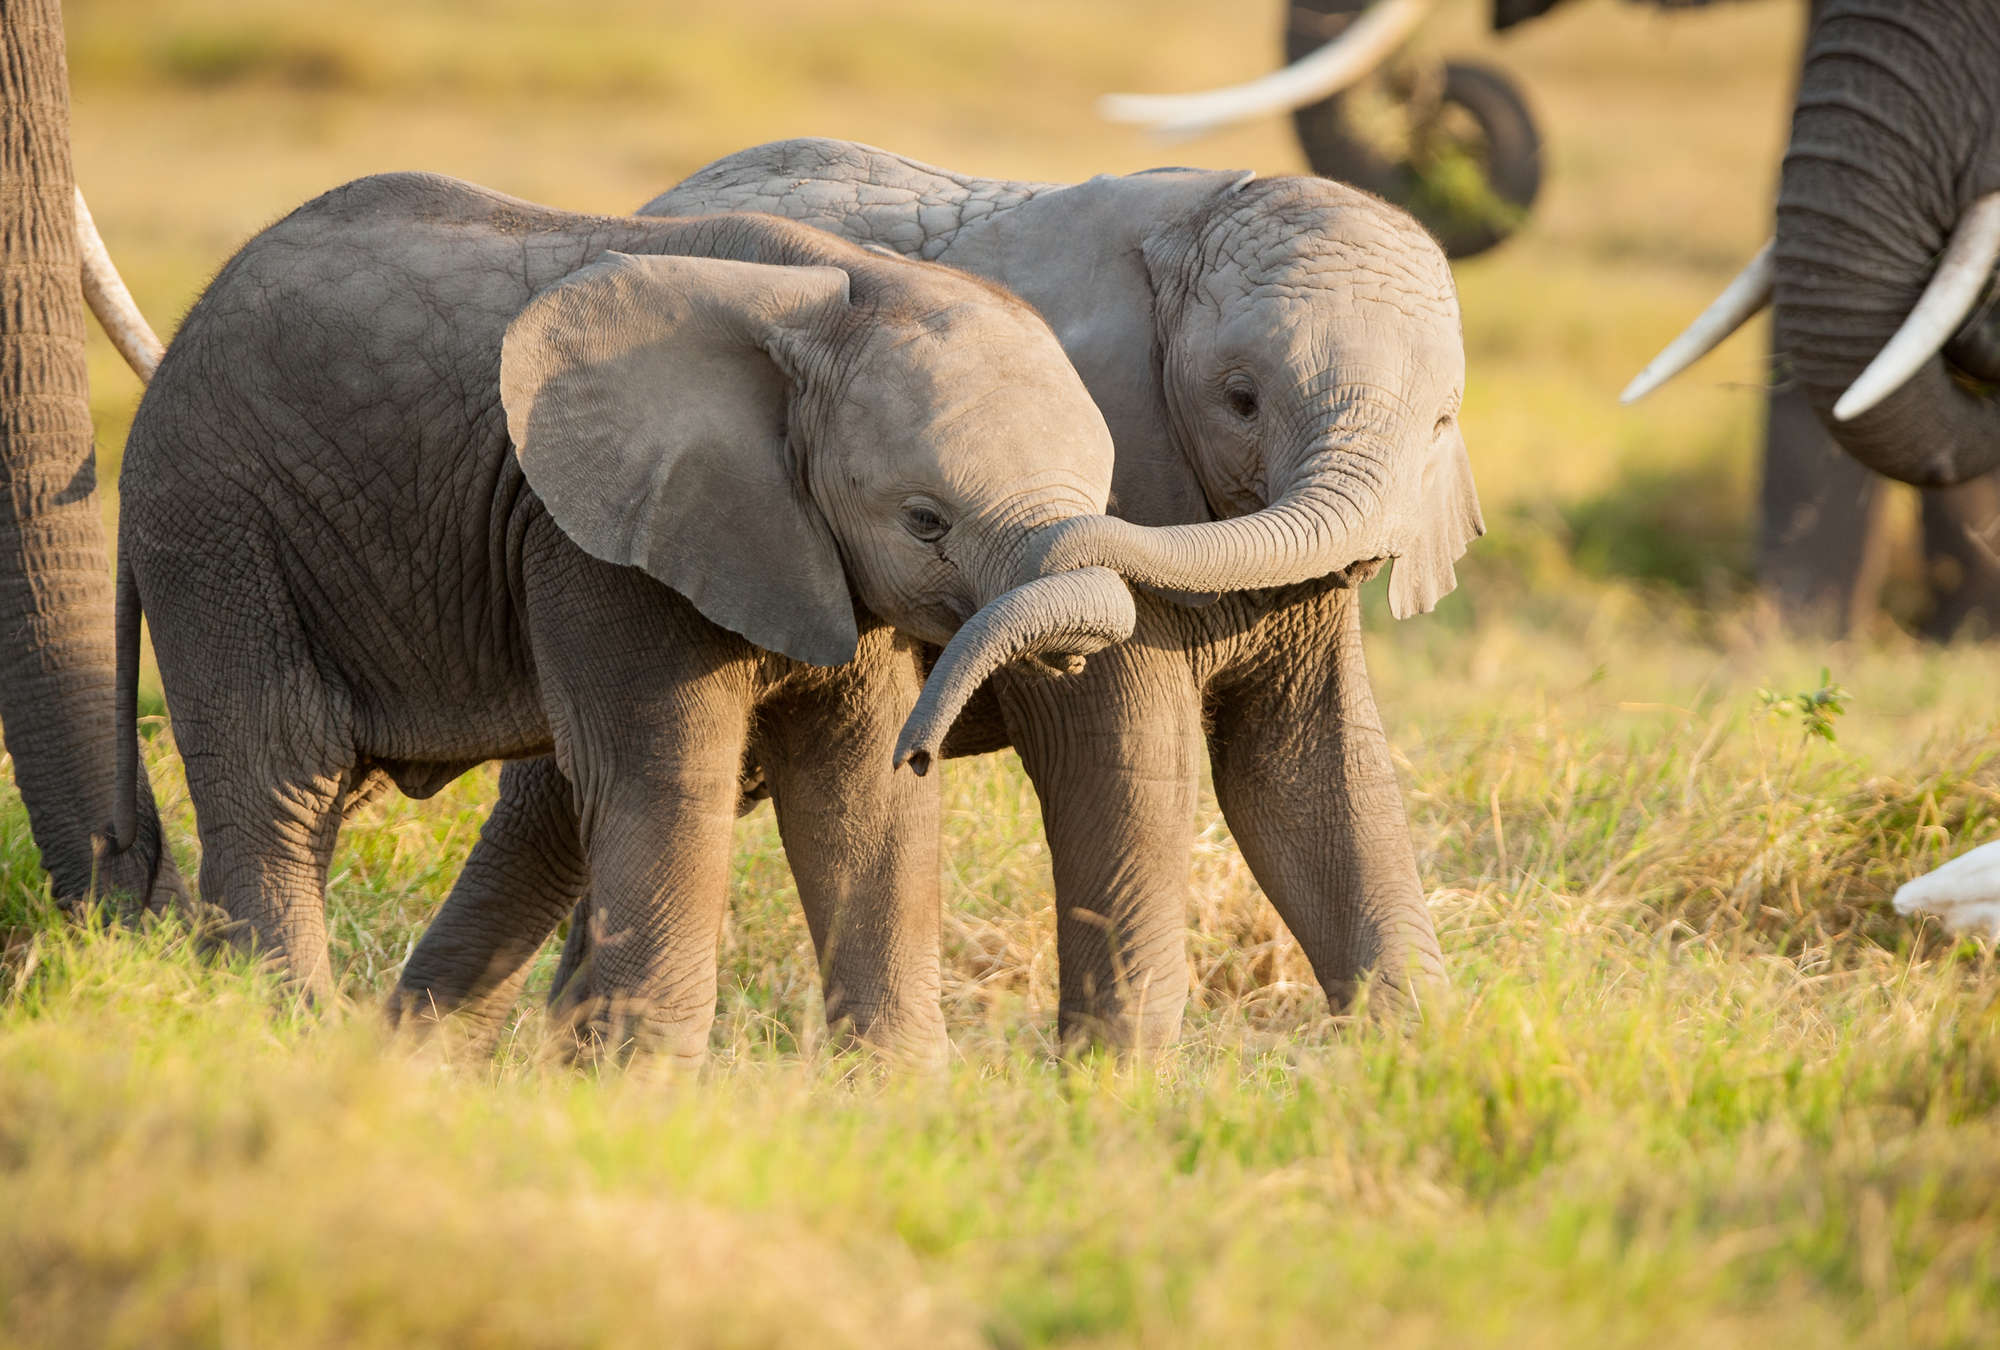             Fototapete Elefantenbabys in der Savanne
        